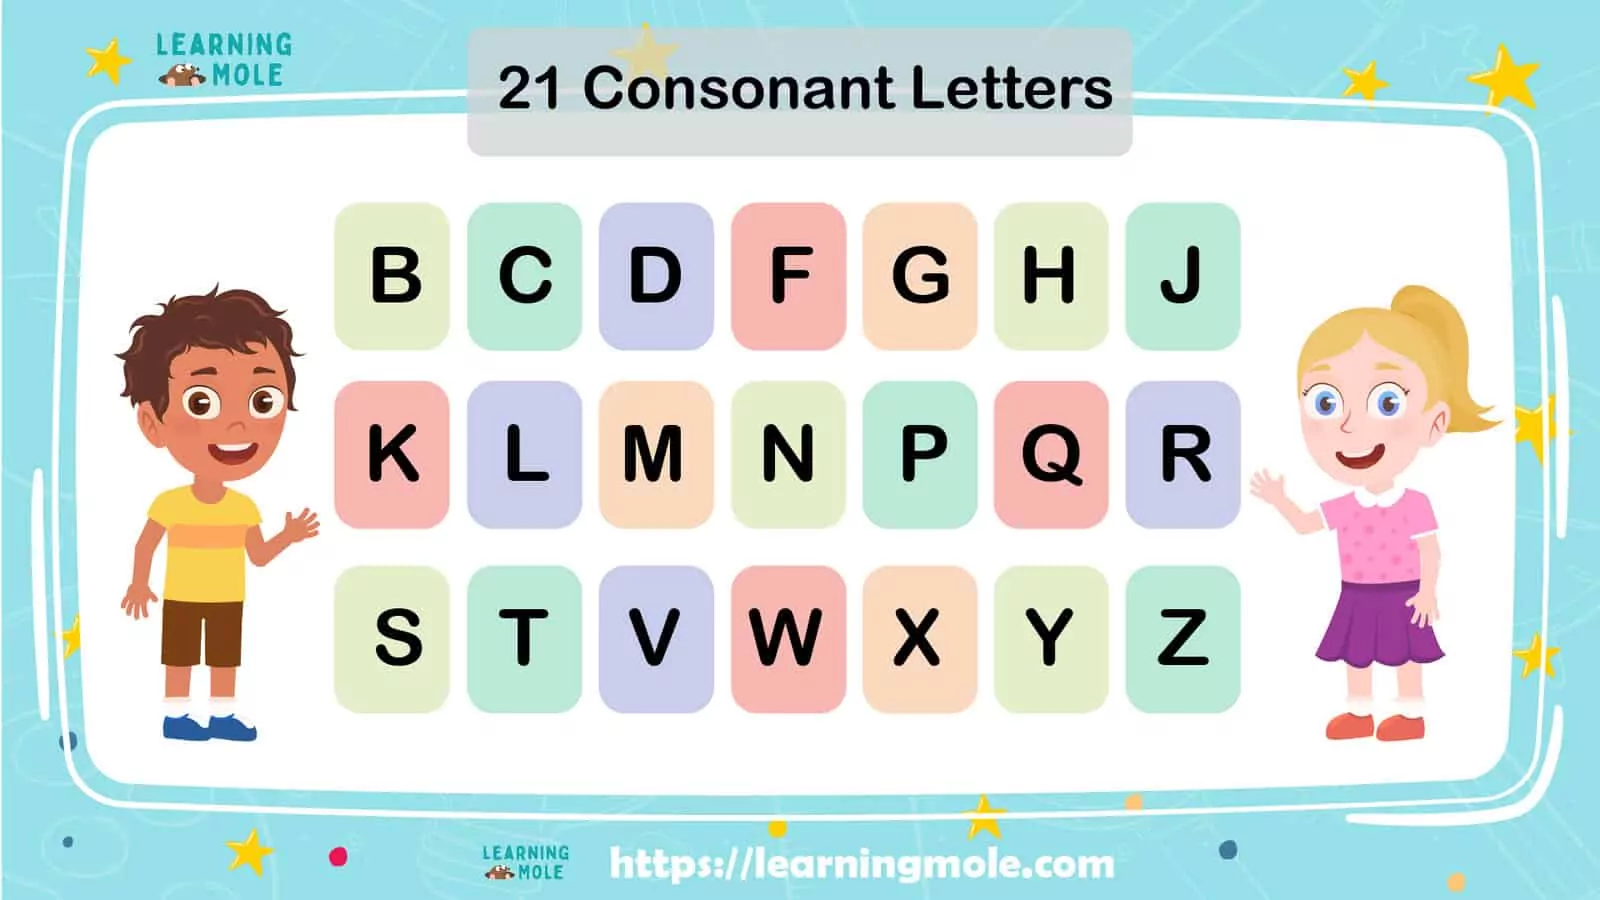 Consonant Letters for Kids